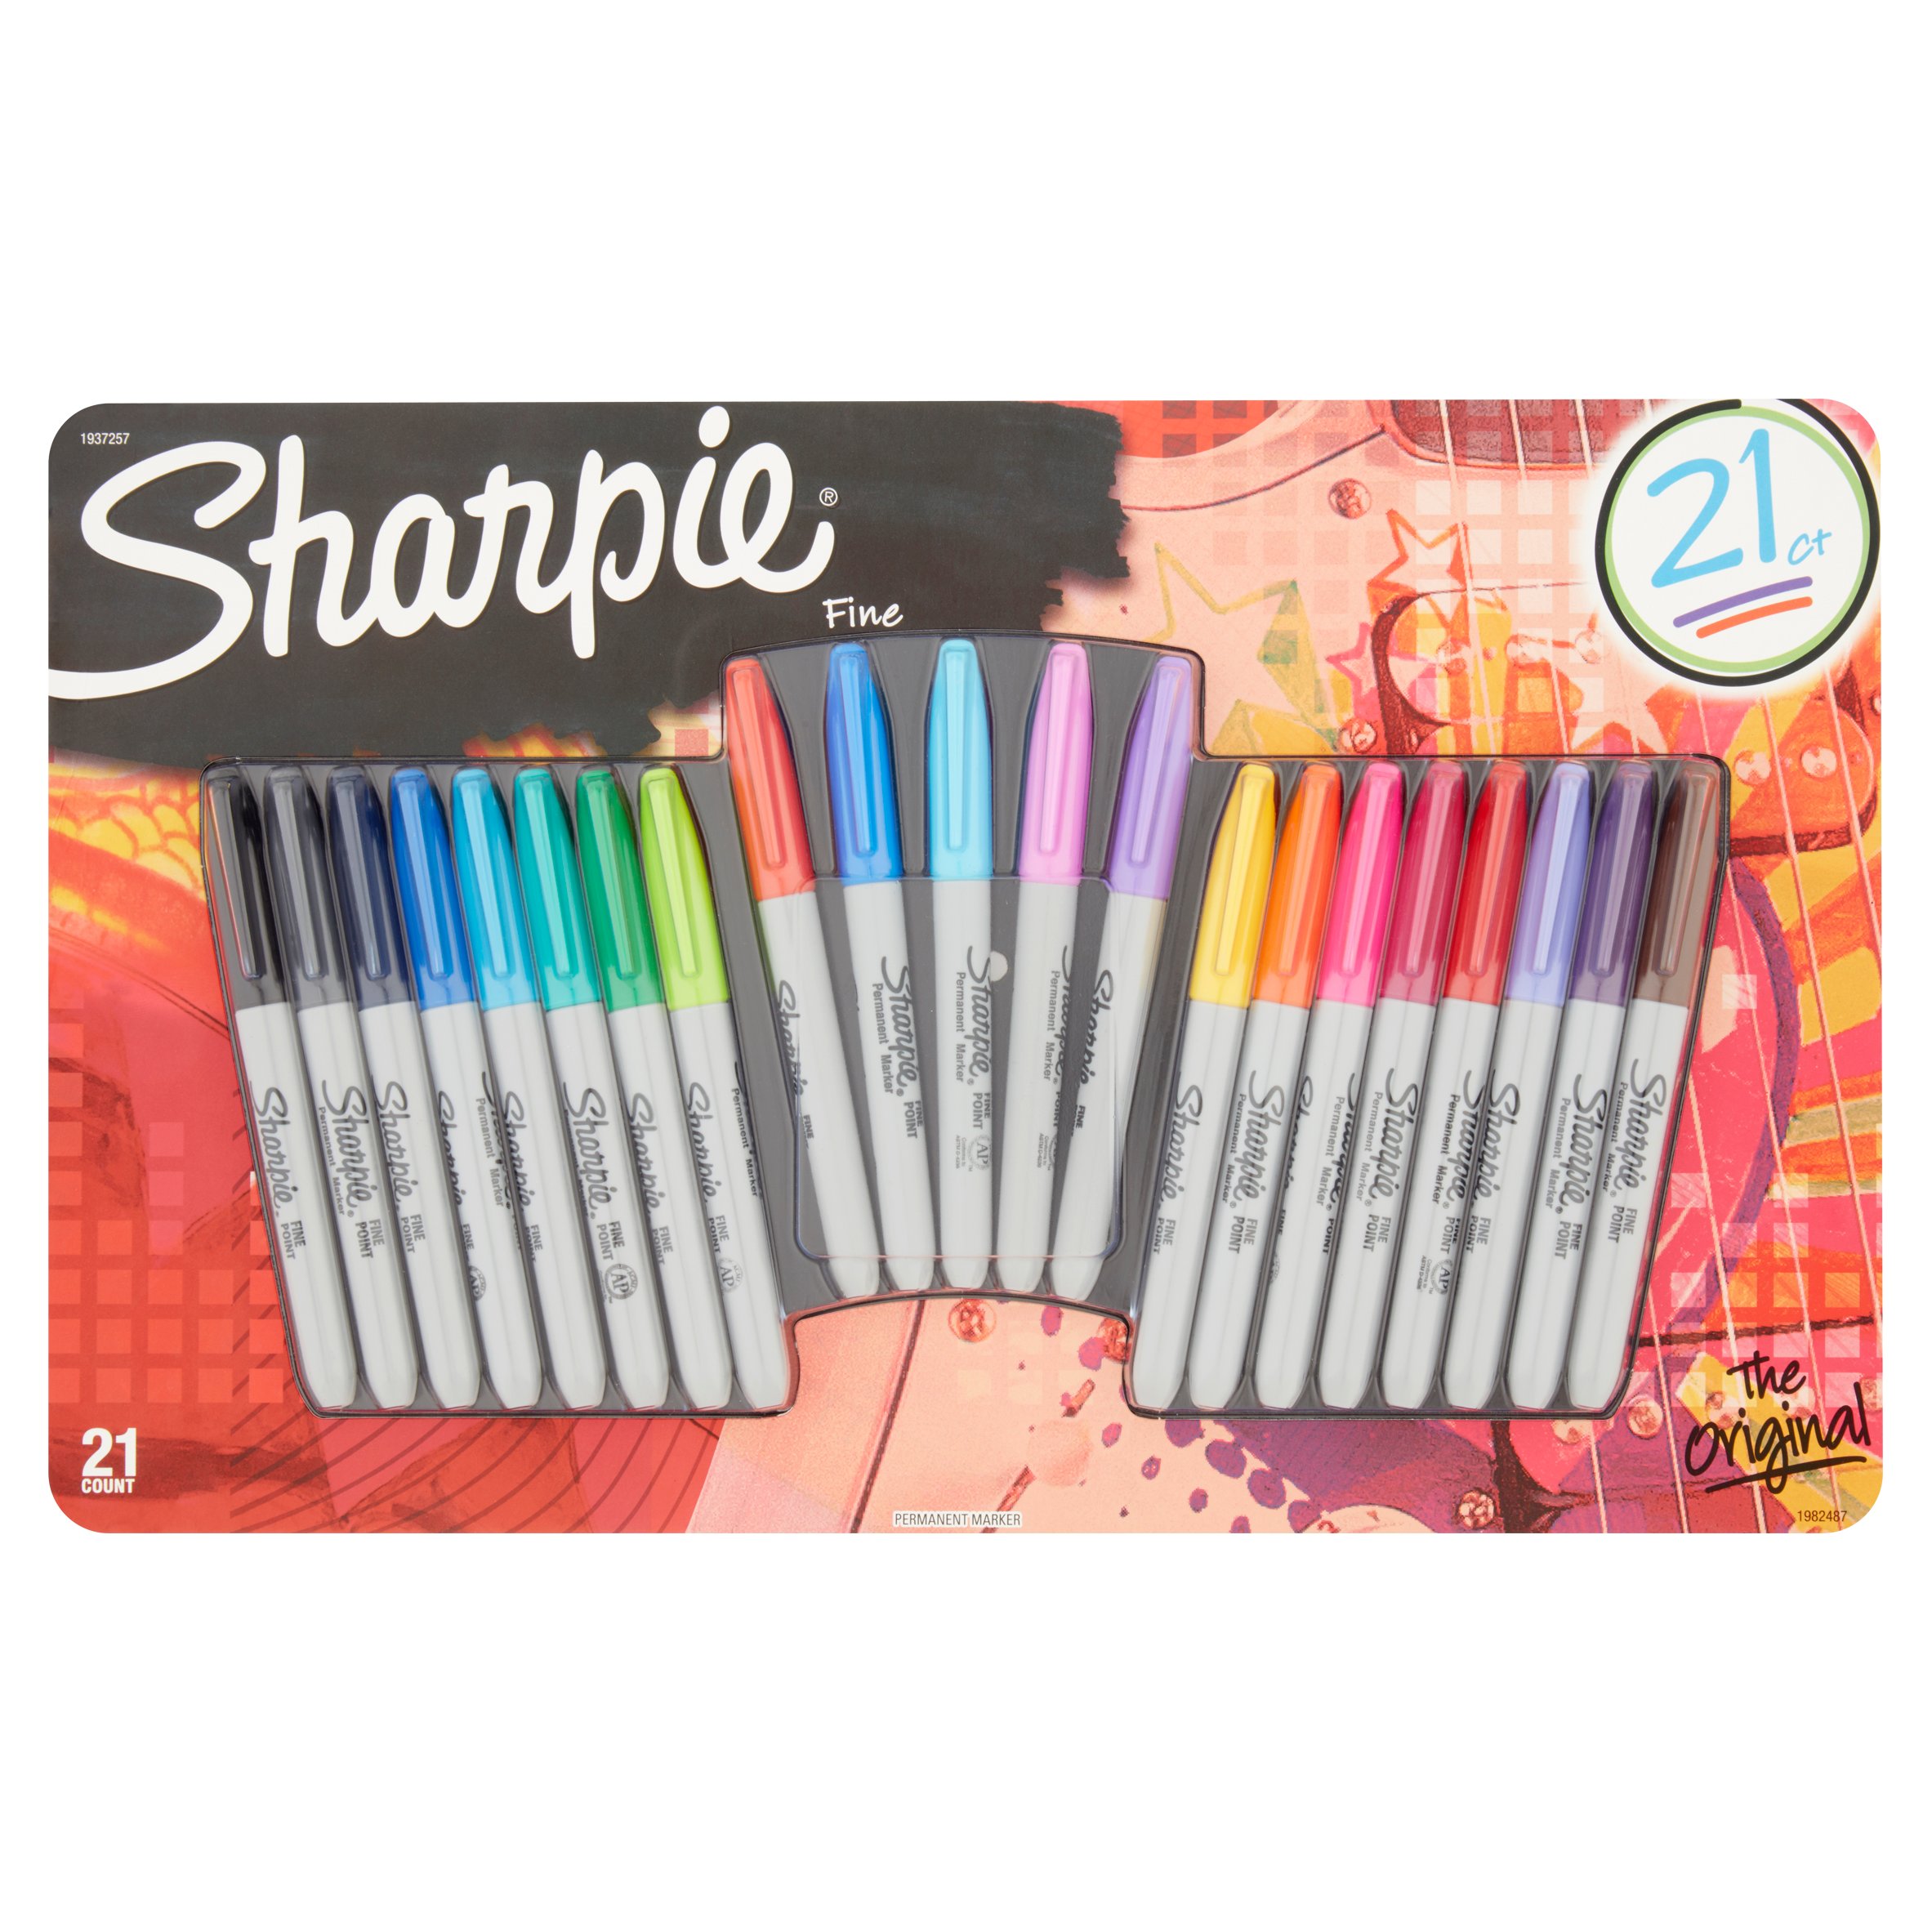 Sharpie The Original Fine Permanent Marker, 21 pack - image 1 of 3